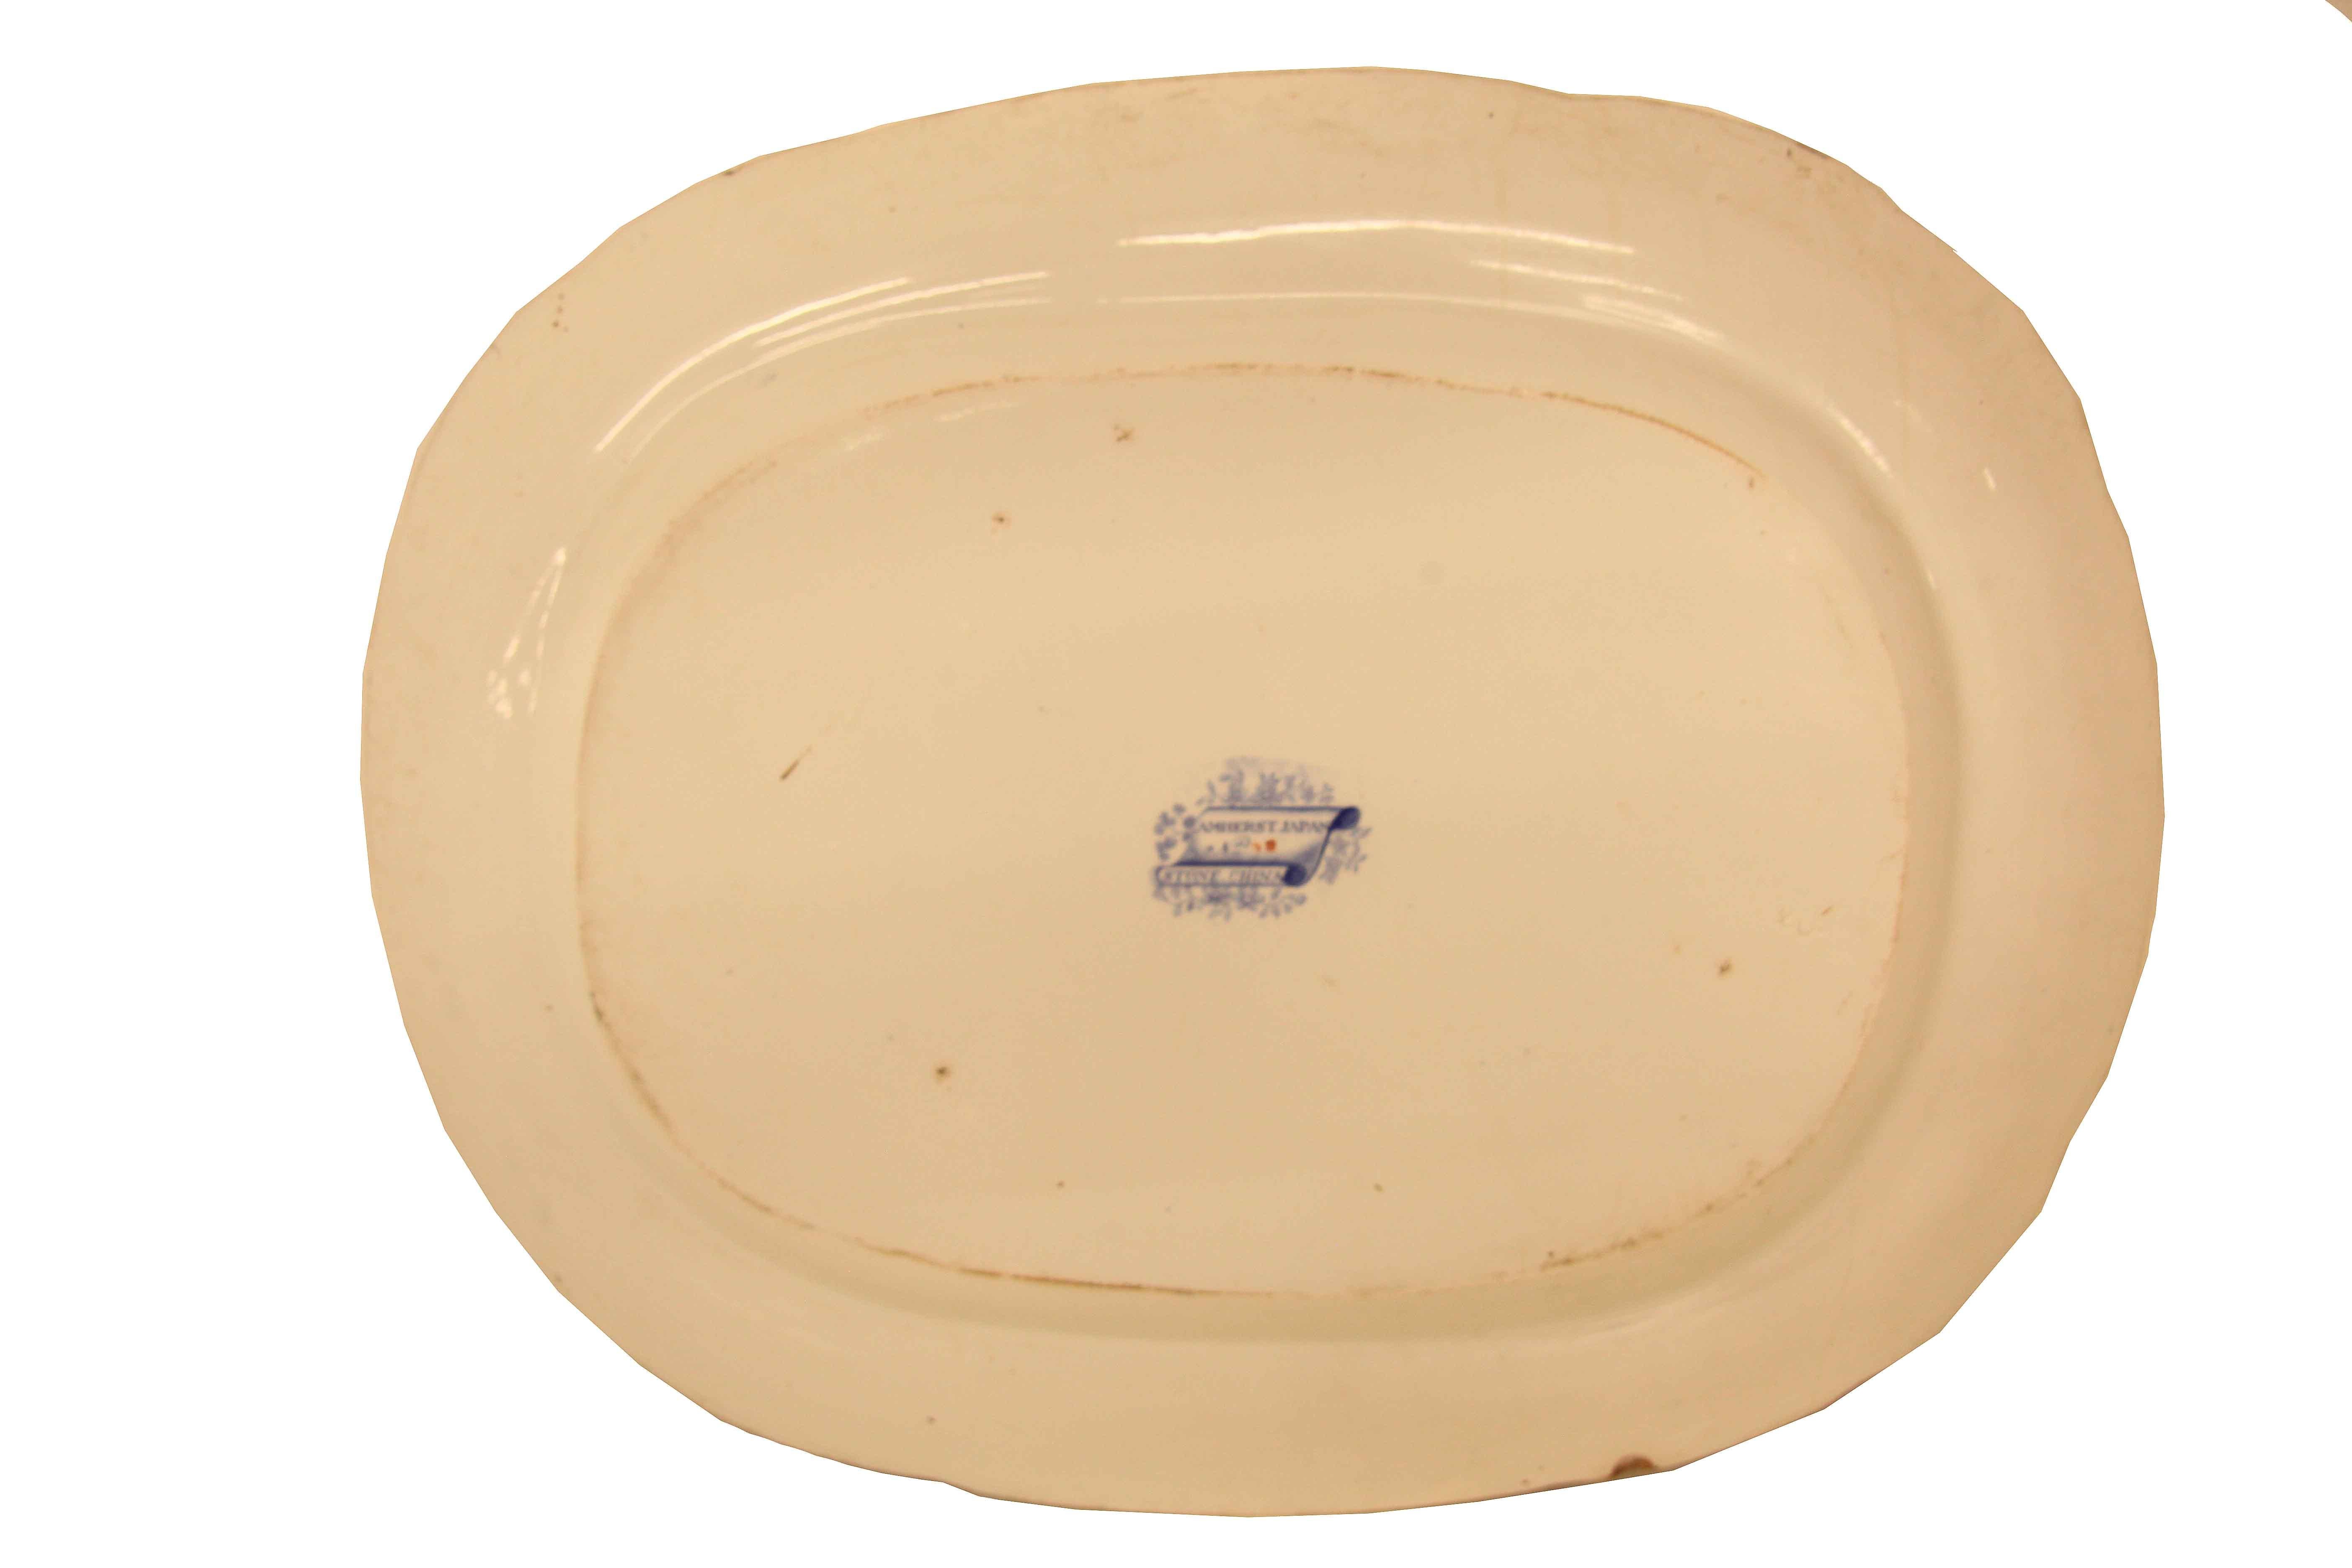 Large Amherst Japan Ironstone  Platter For Sale 5